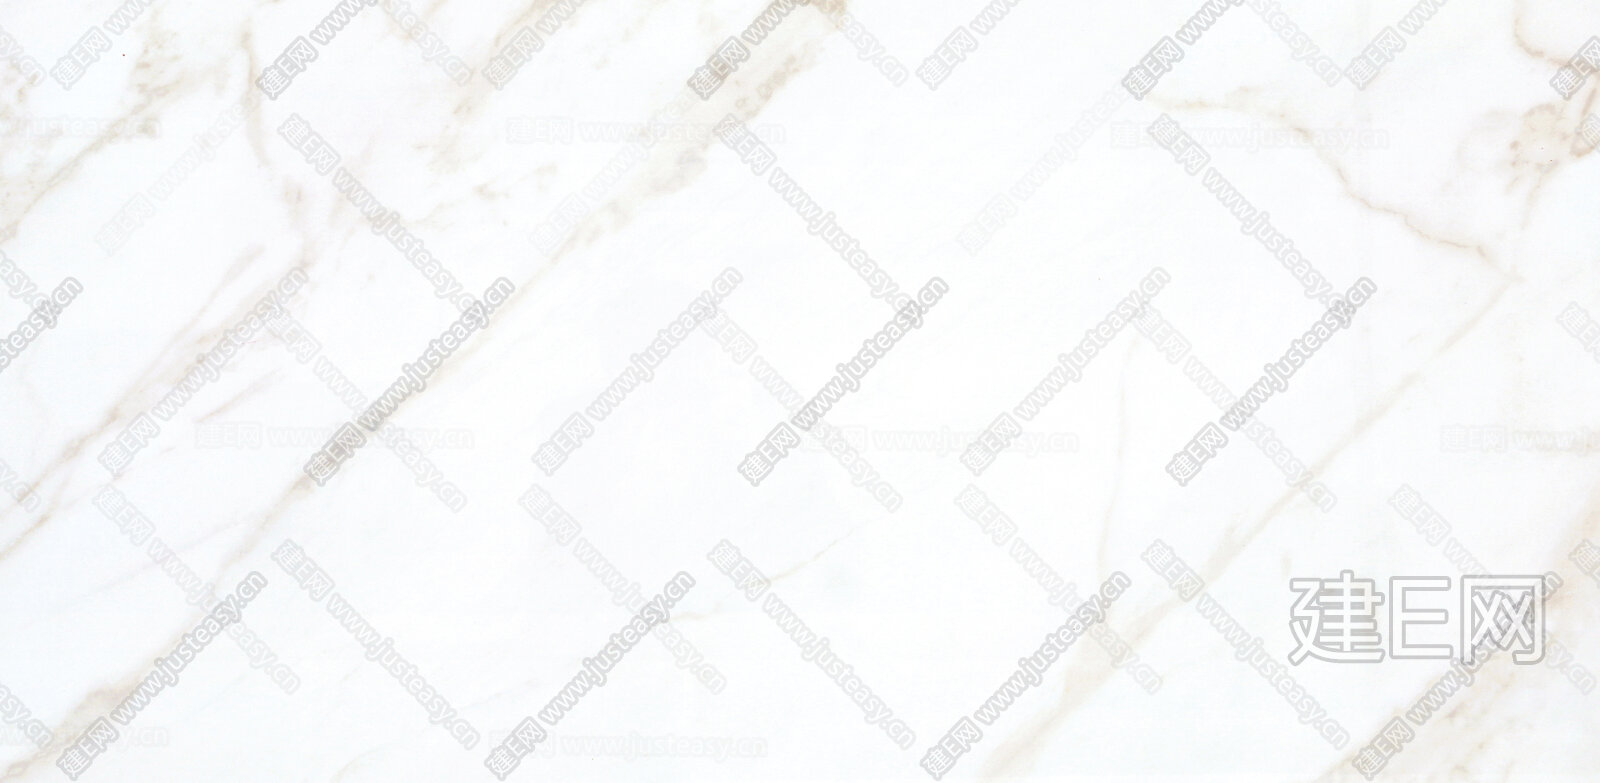 C918FTD001 卡拉拉白 意大利 - 陶瓷一线品牌，佛山瓷砖品牌，潮装就用潮元素超感砖，潮元素瓷砖【官网】|广东创利泰陶瓷有限公司